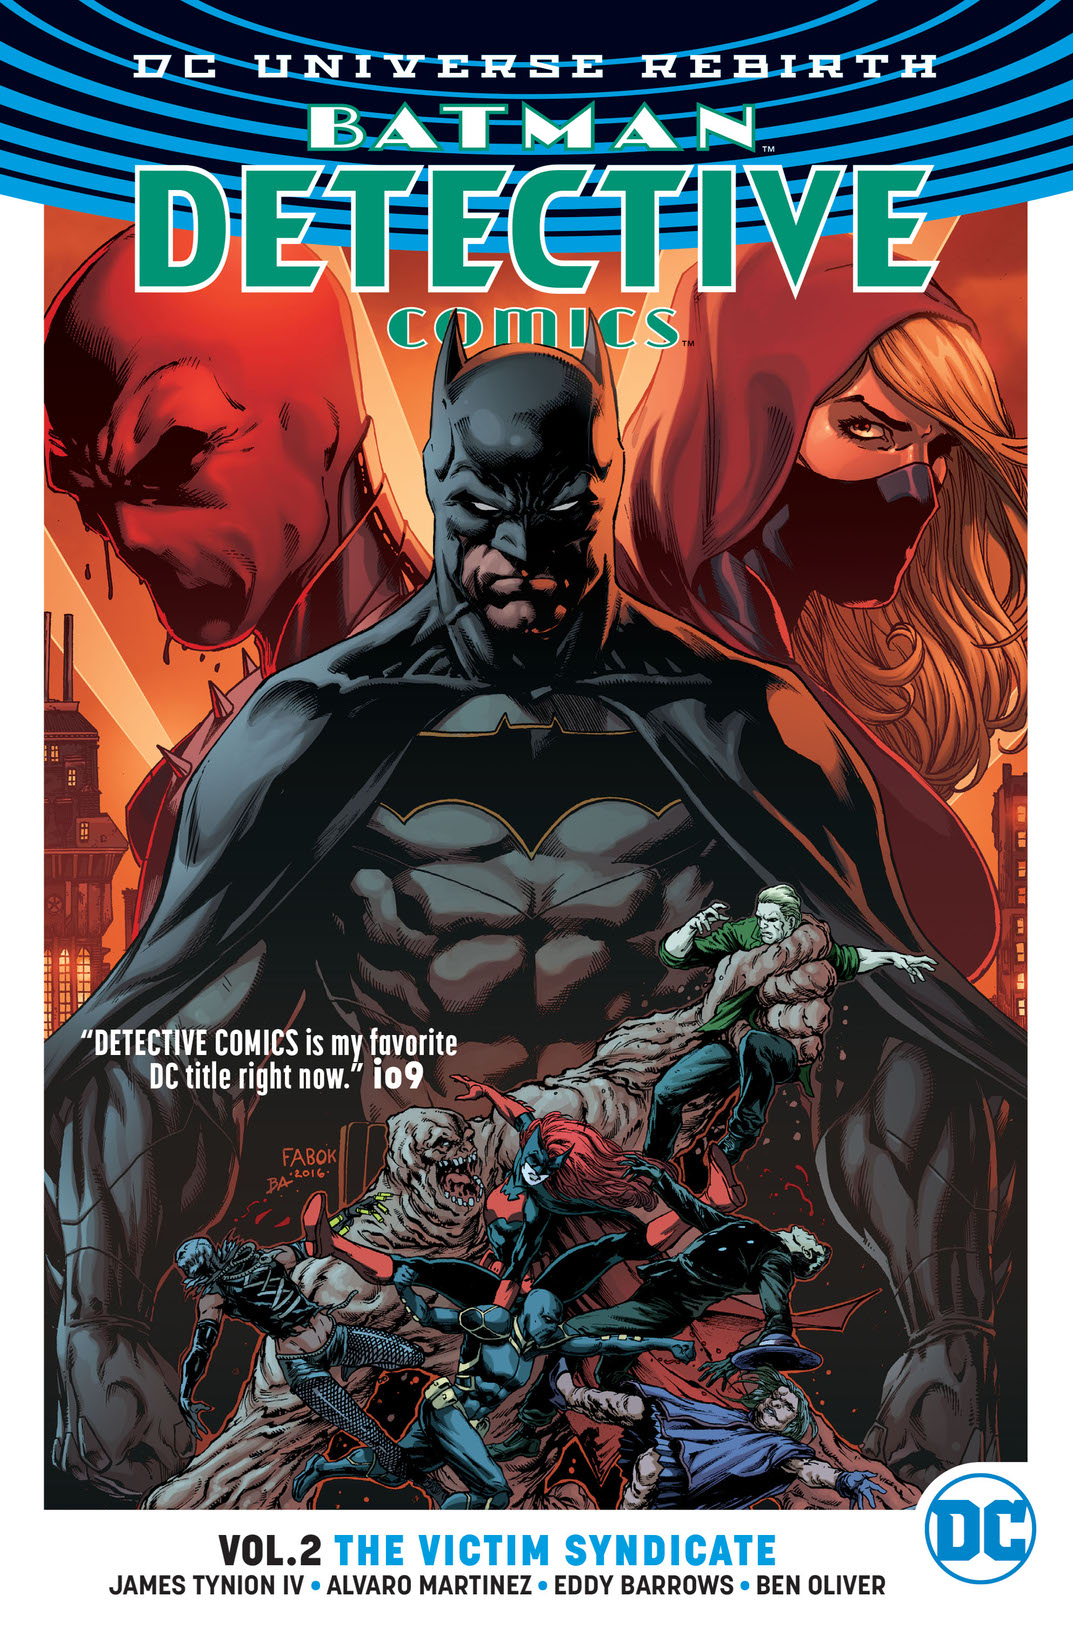 Batman - Detective Comics Vol. 2: The Victim Syndicate preview images